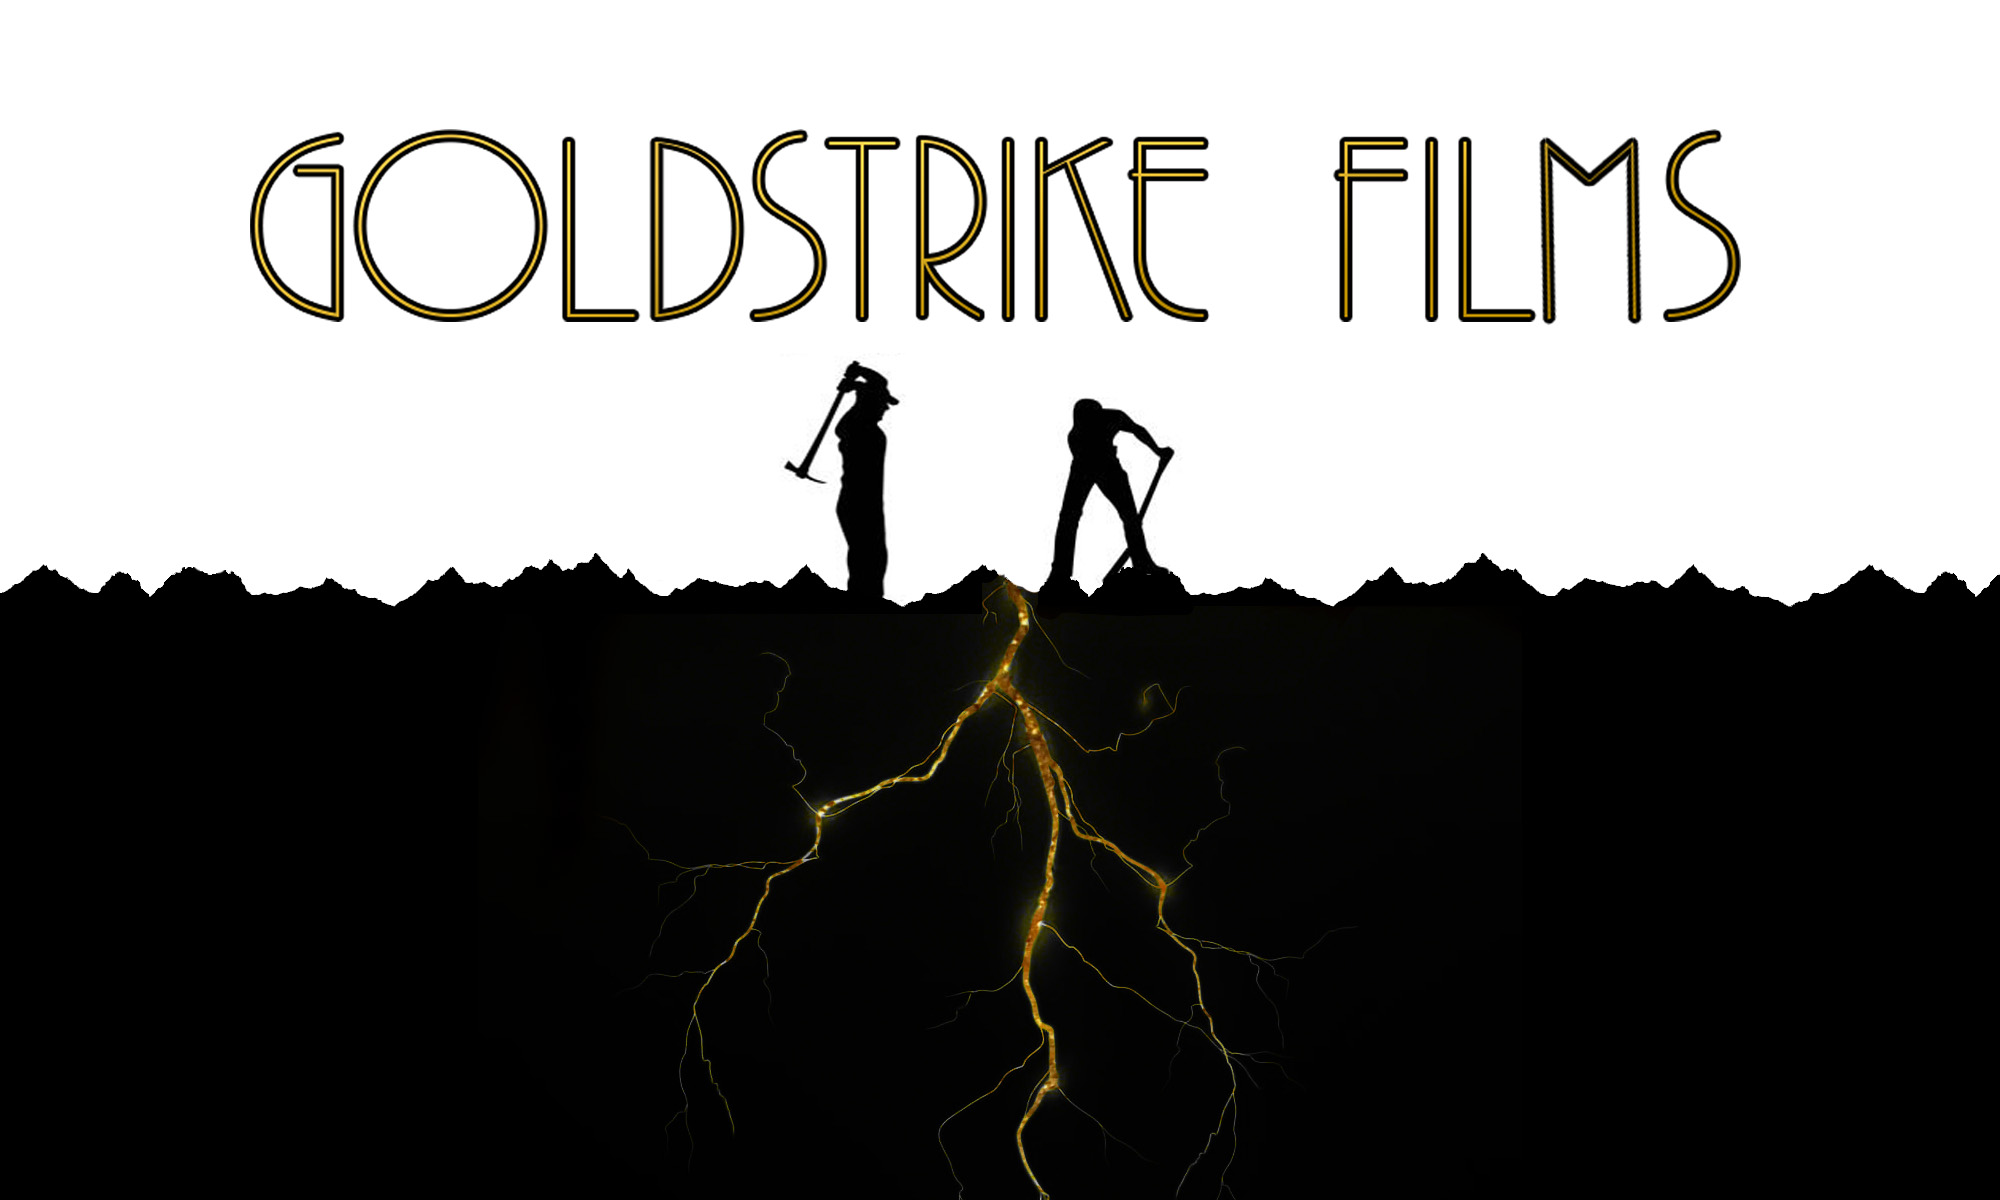 Goldstrike Films